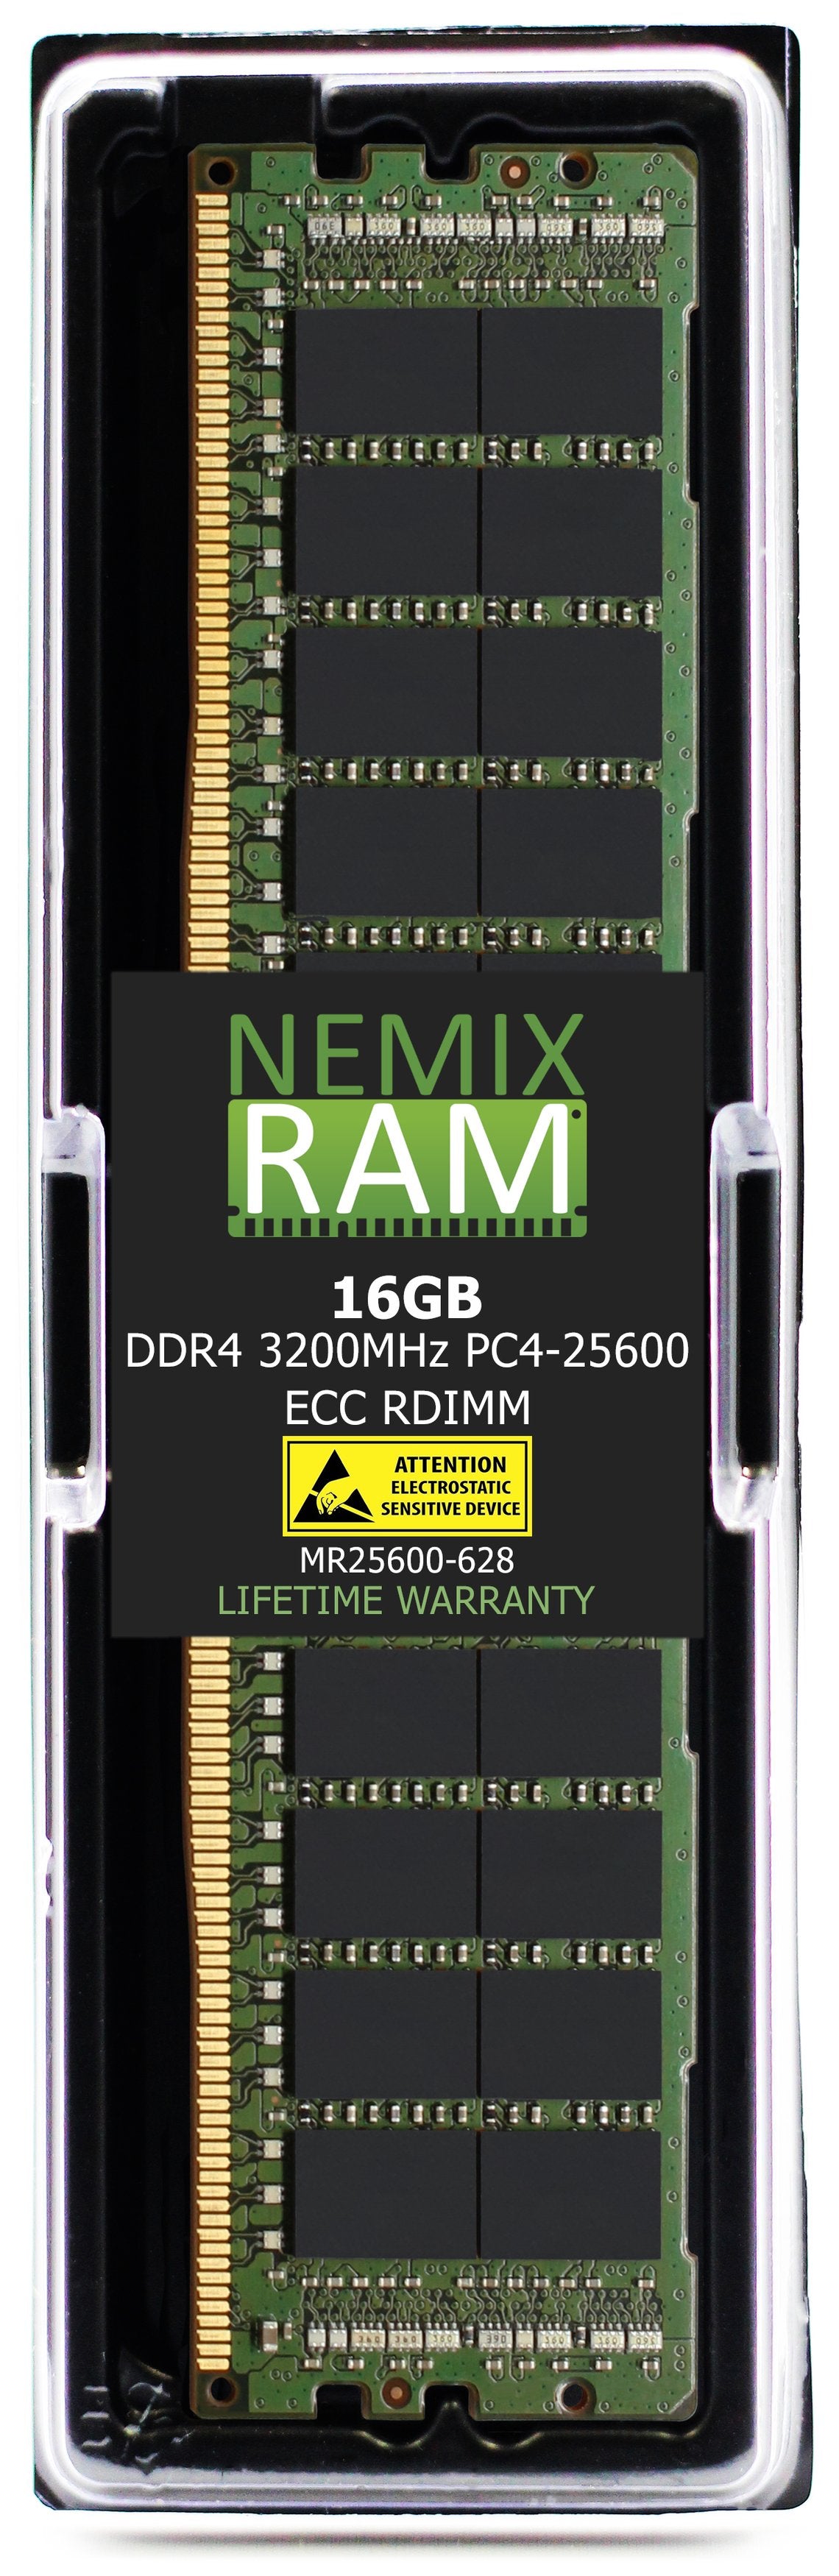 16GB DDR4 3200MHZ PC4-25600 RDIMM Compatible with Supermicro MEM-DR416L-SL02-ER32